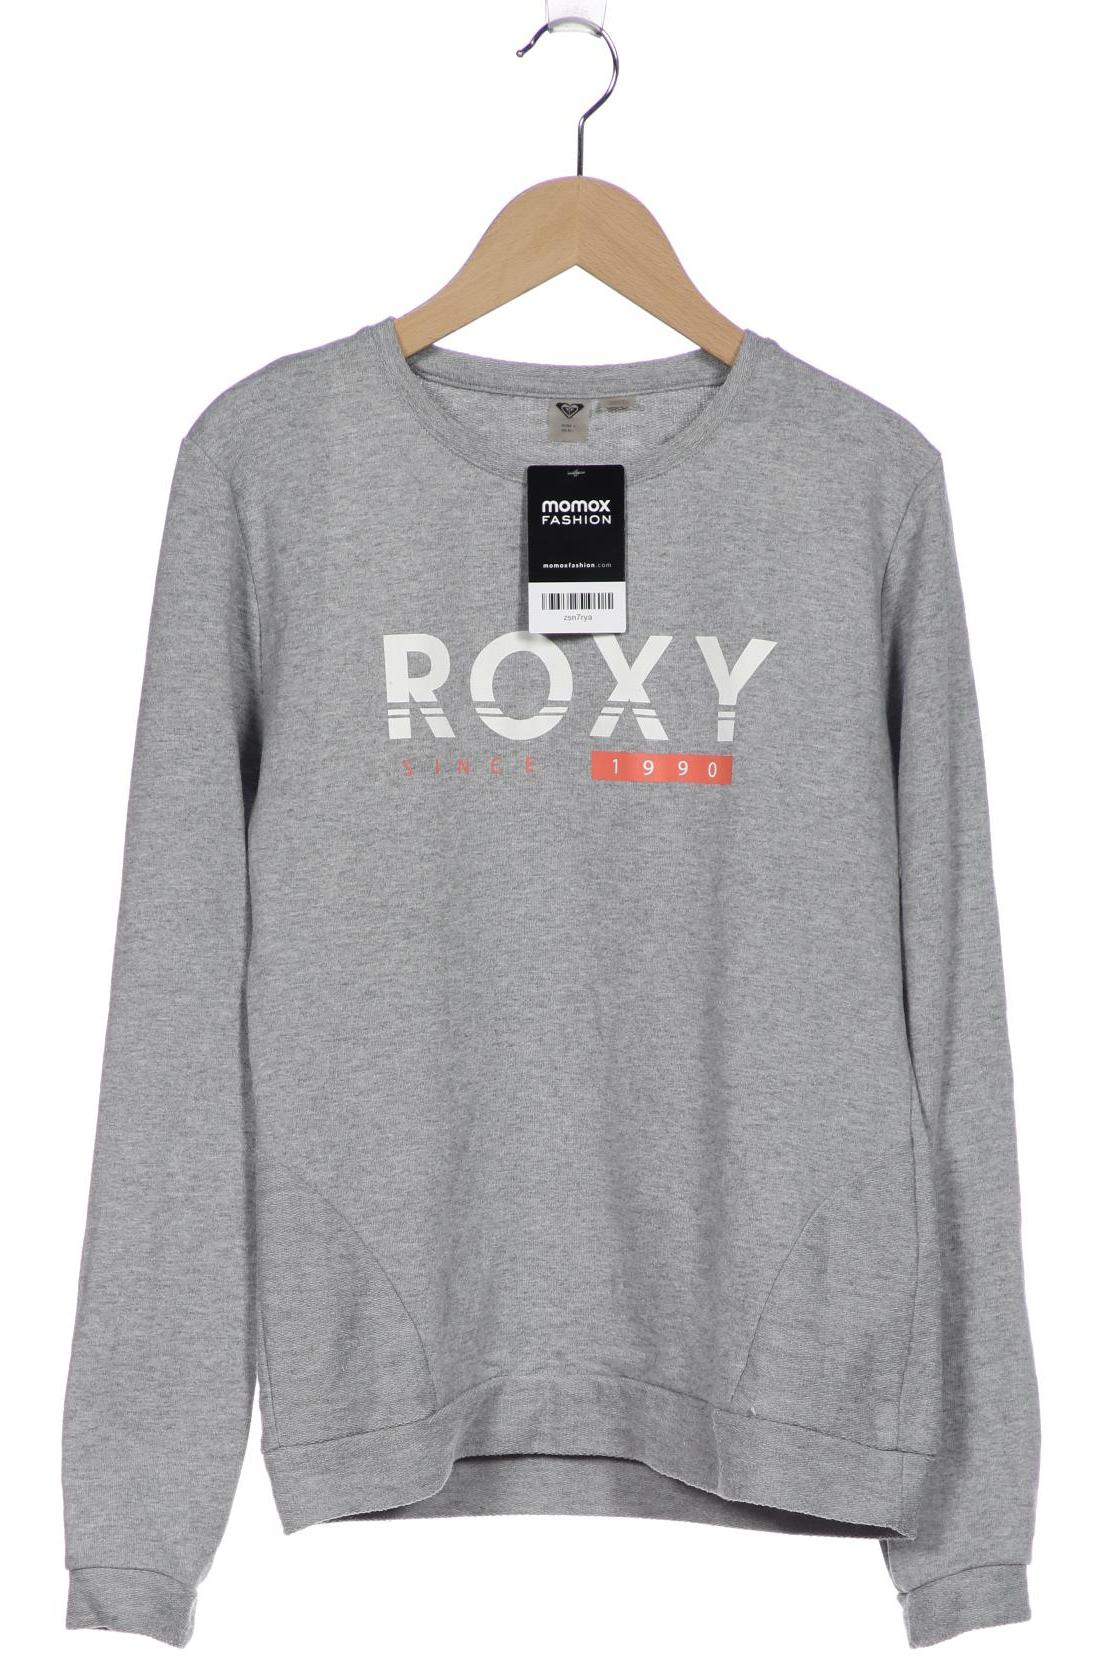 Roxy Damen Sweatshirt, grau von Roxy